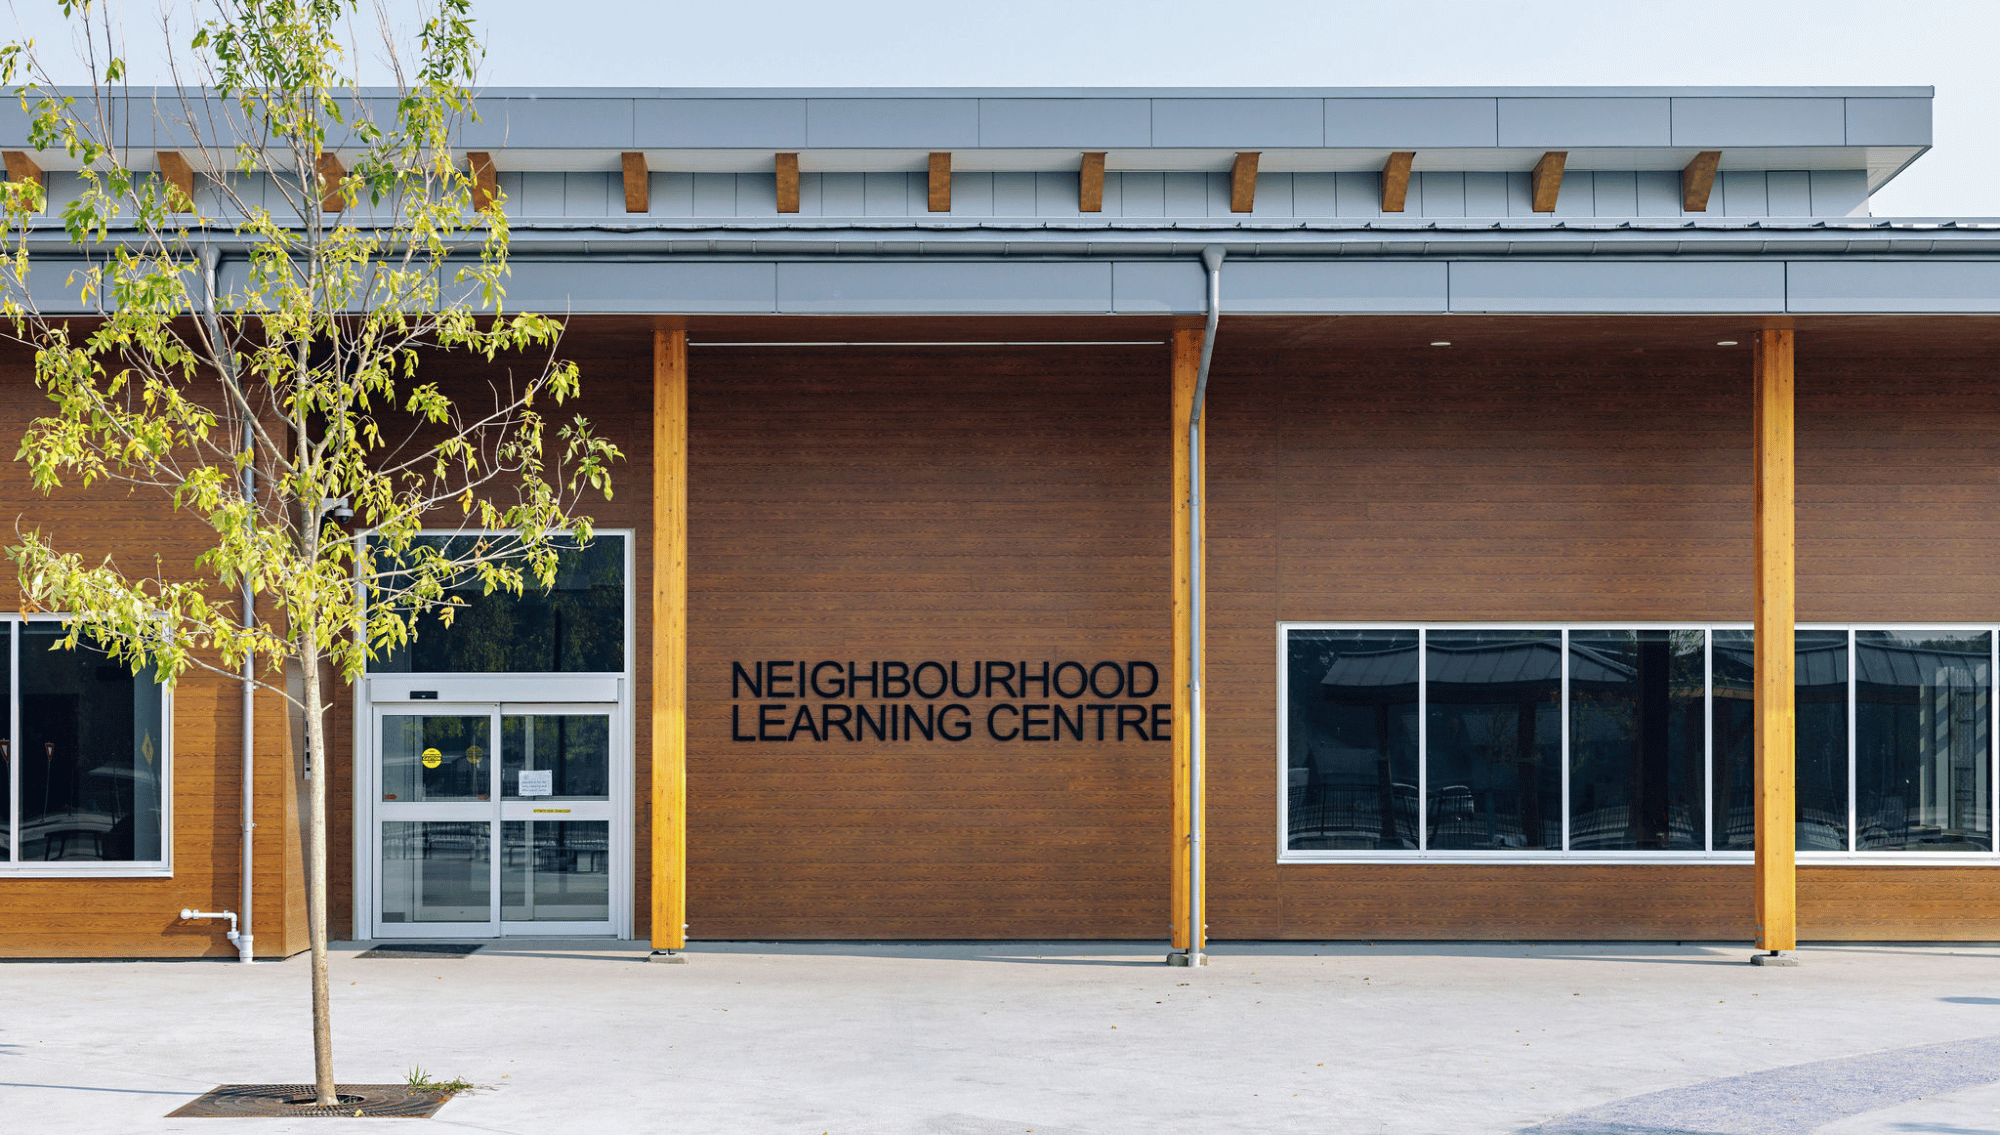 Quesnel Junior School Neighbourhood Learning Centre.